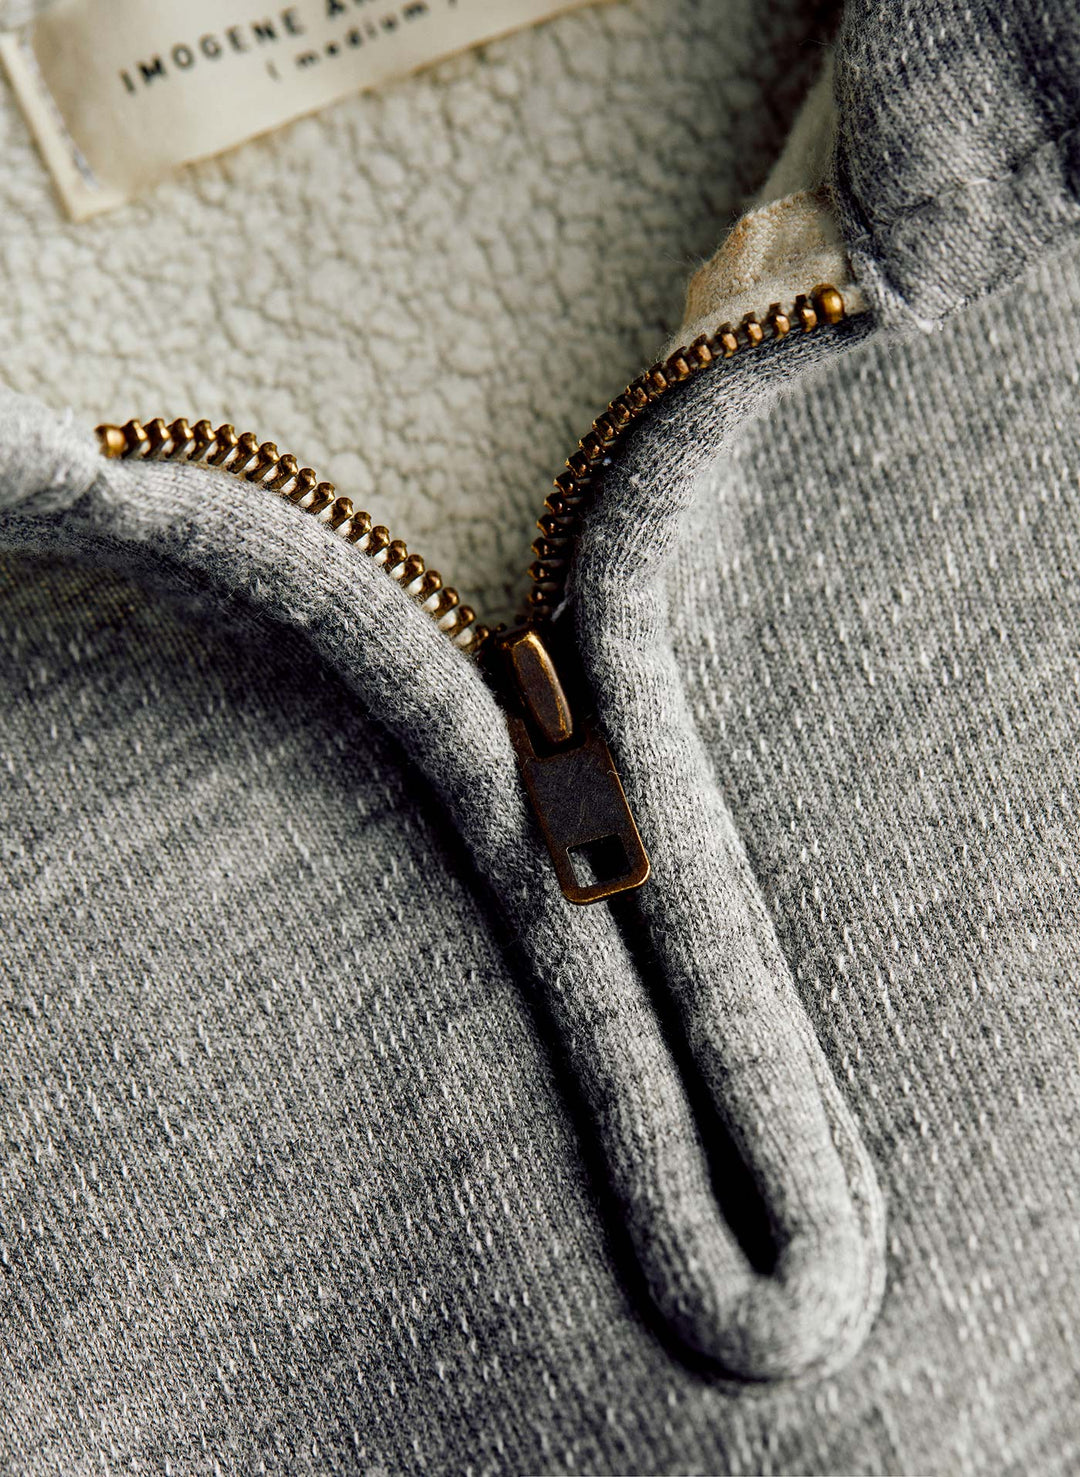 a close up of a zipper